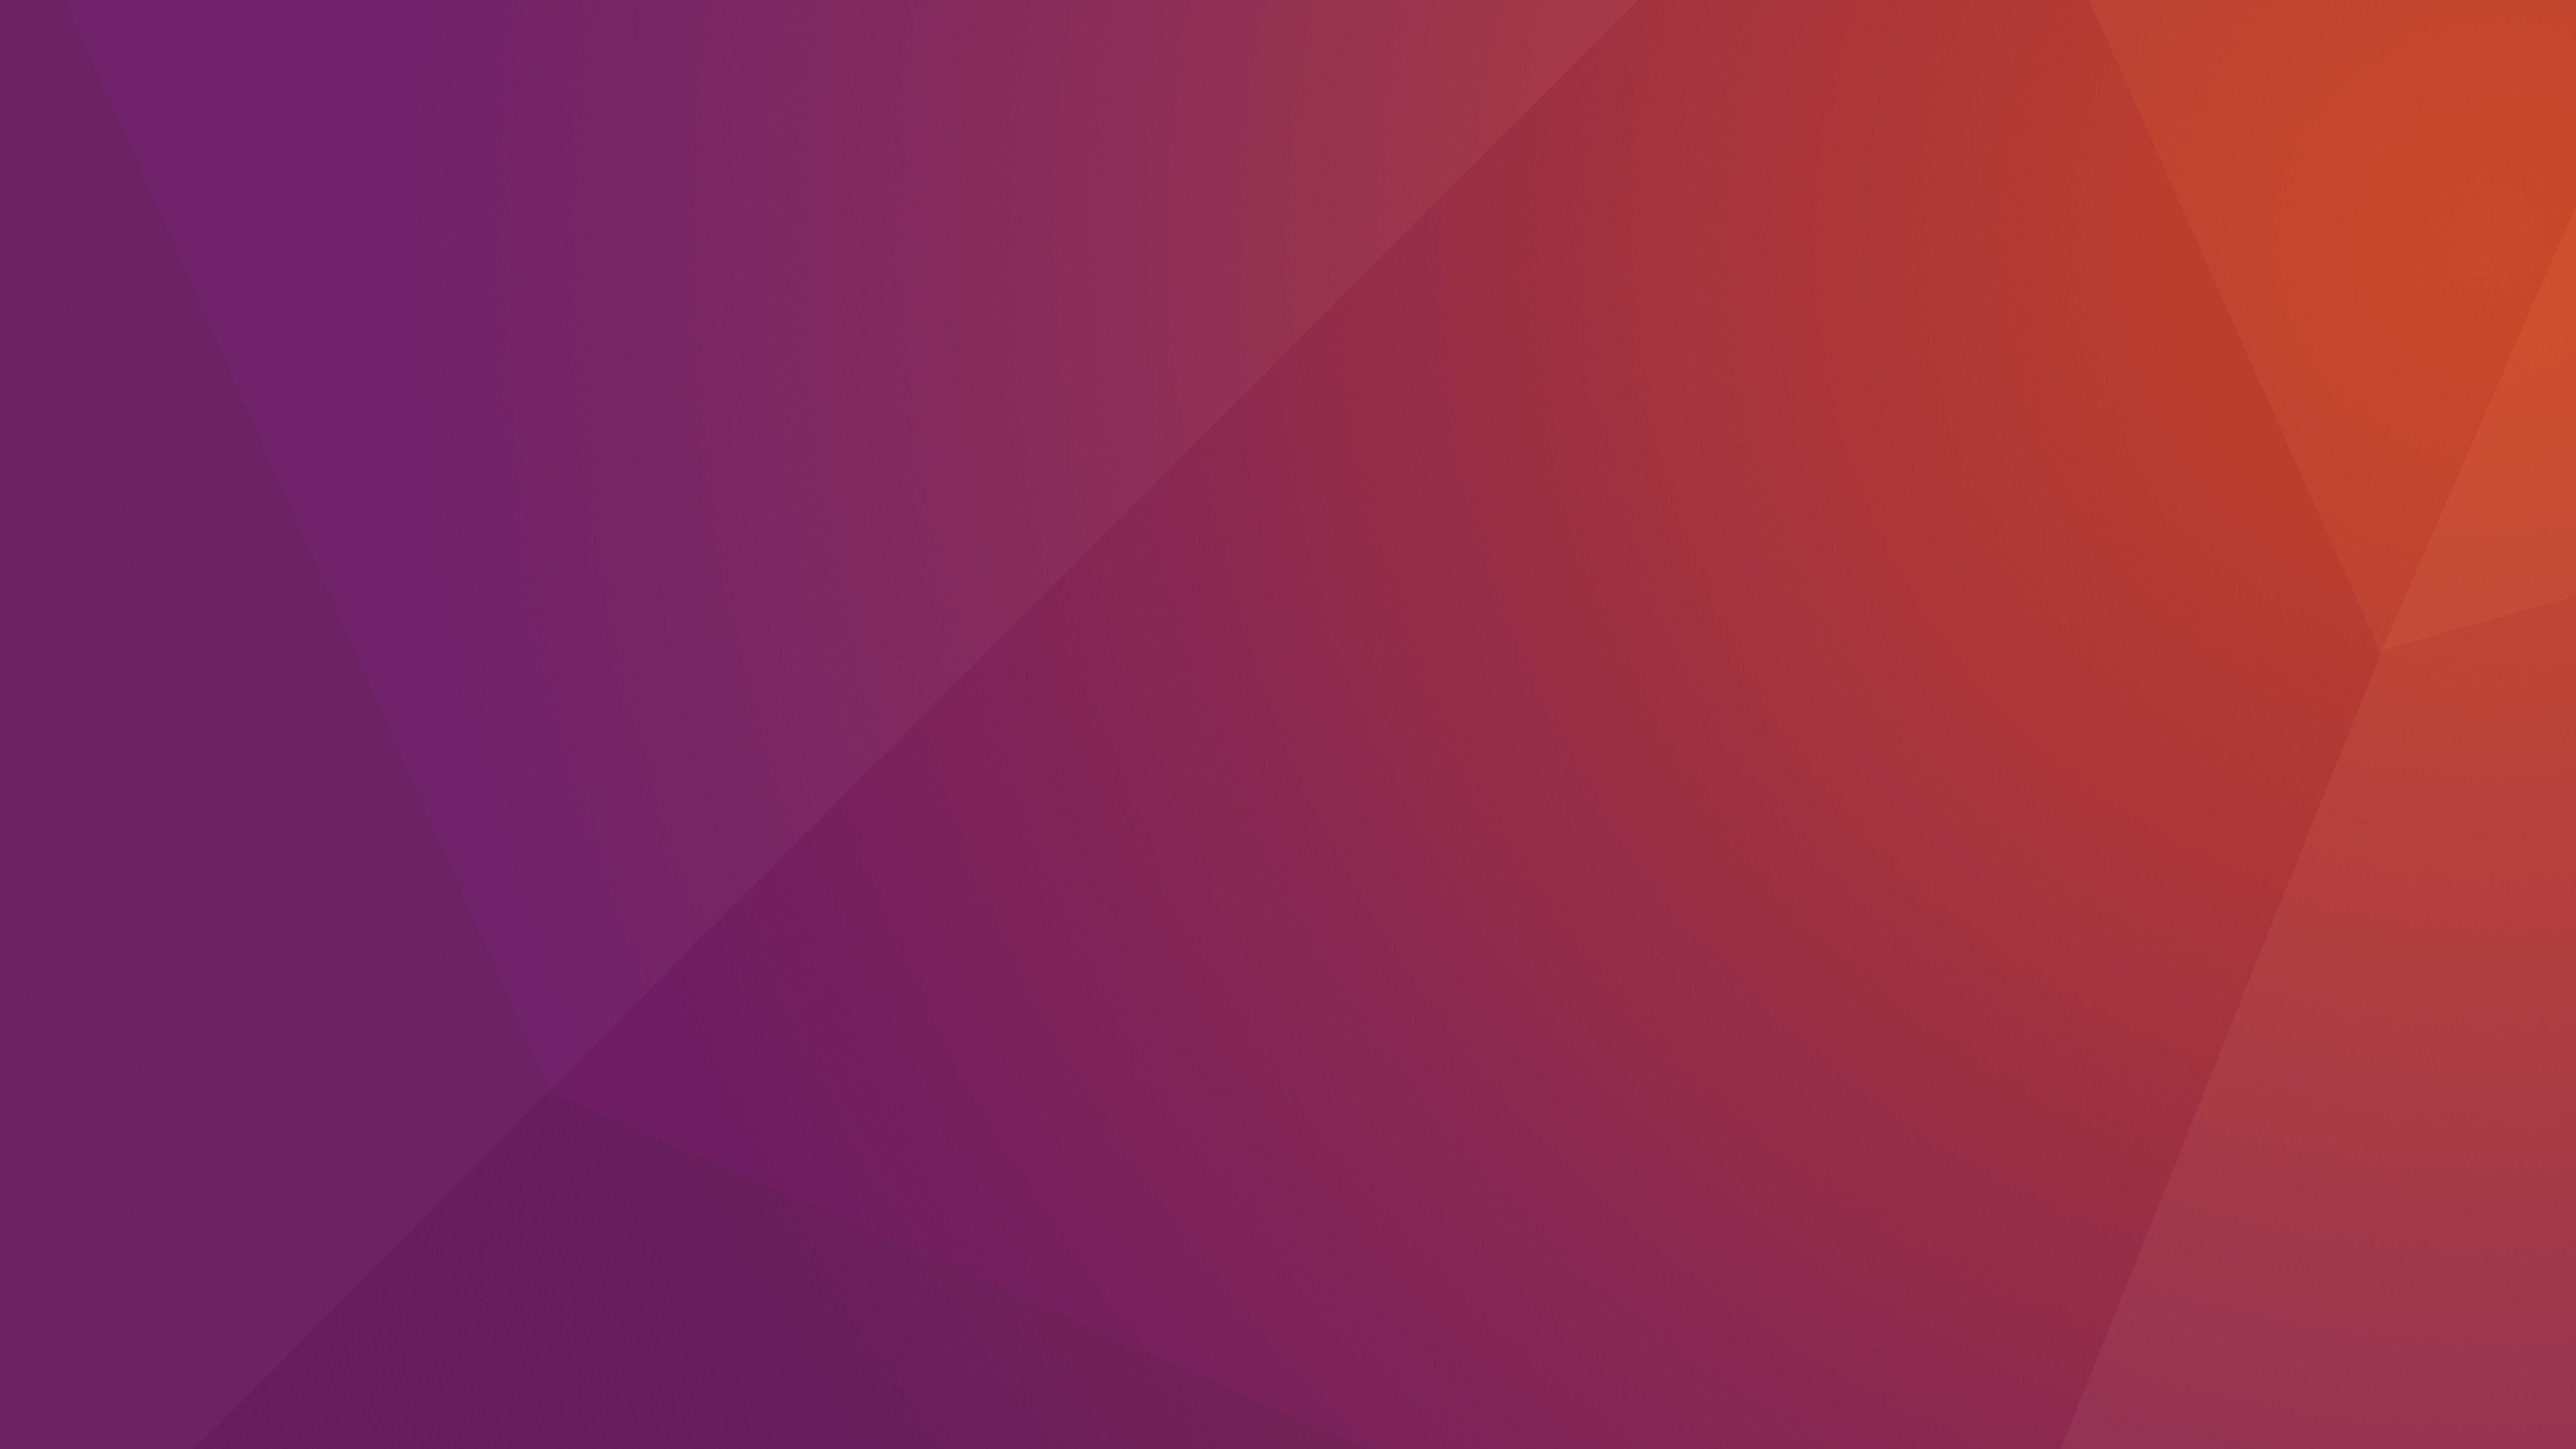 Ubuntu 16.04 LTS: Default Desktop Wallpaper Unveiled